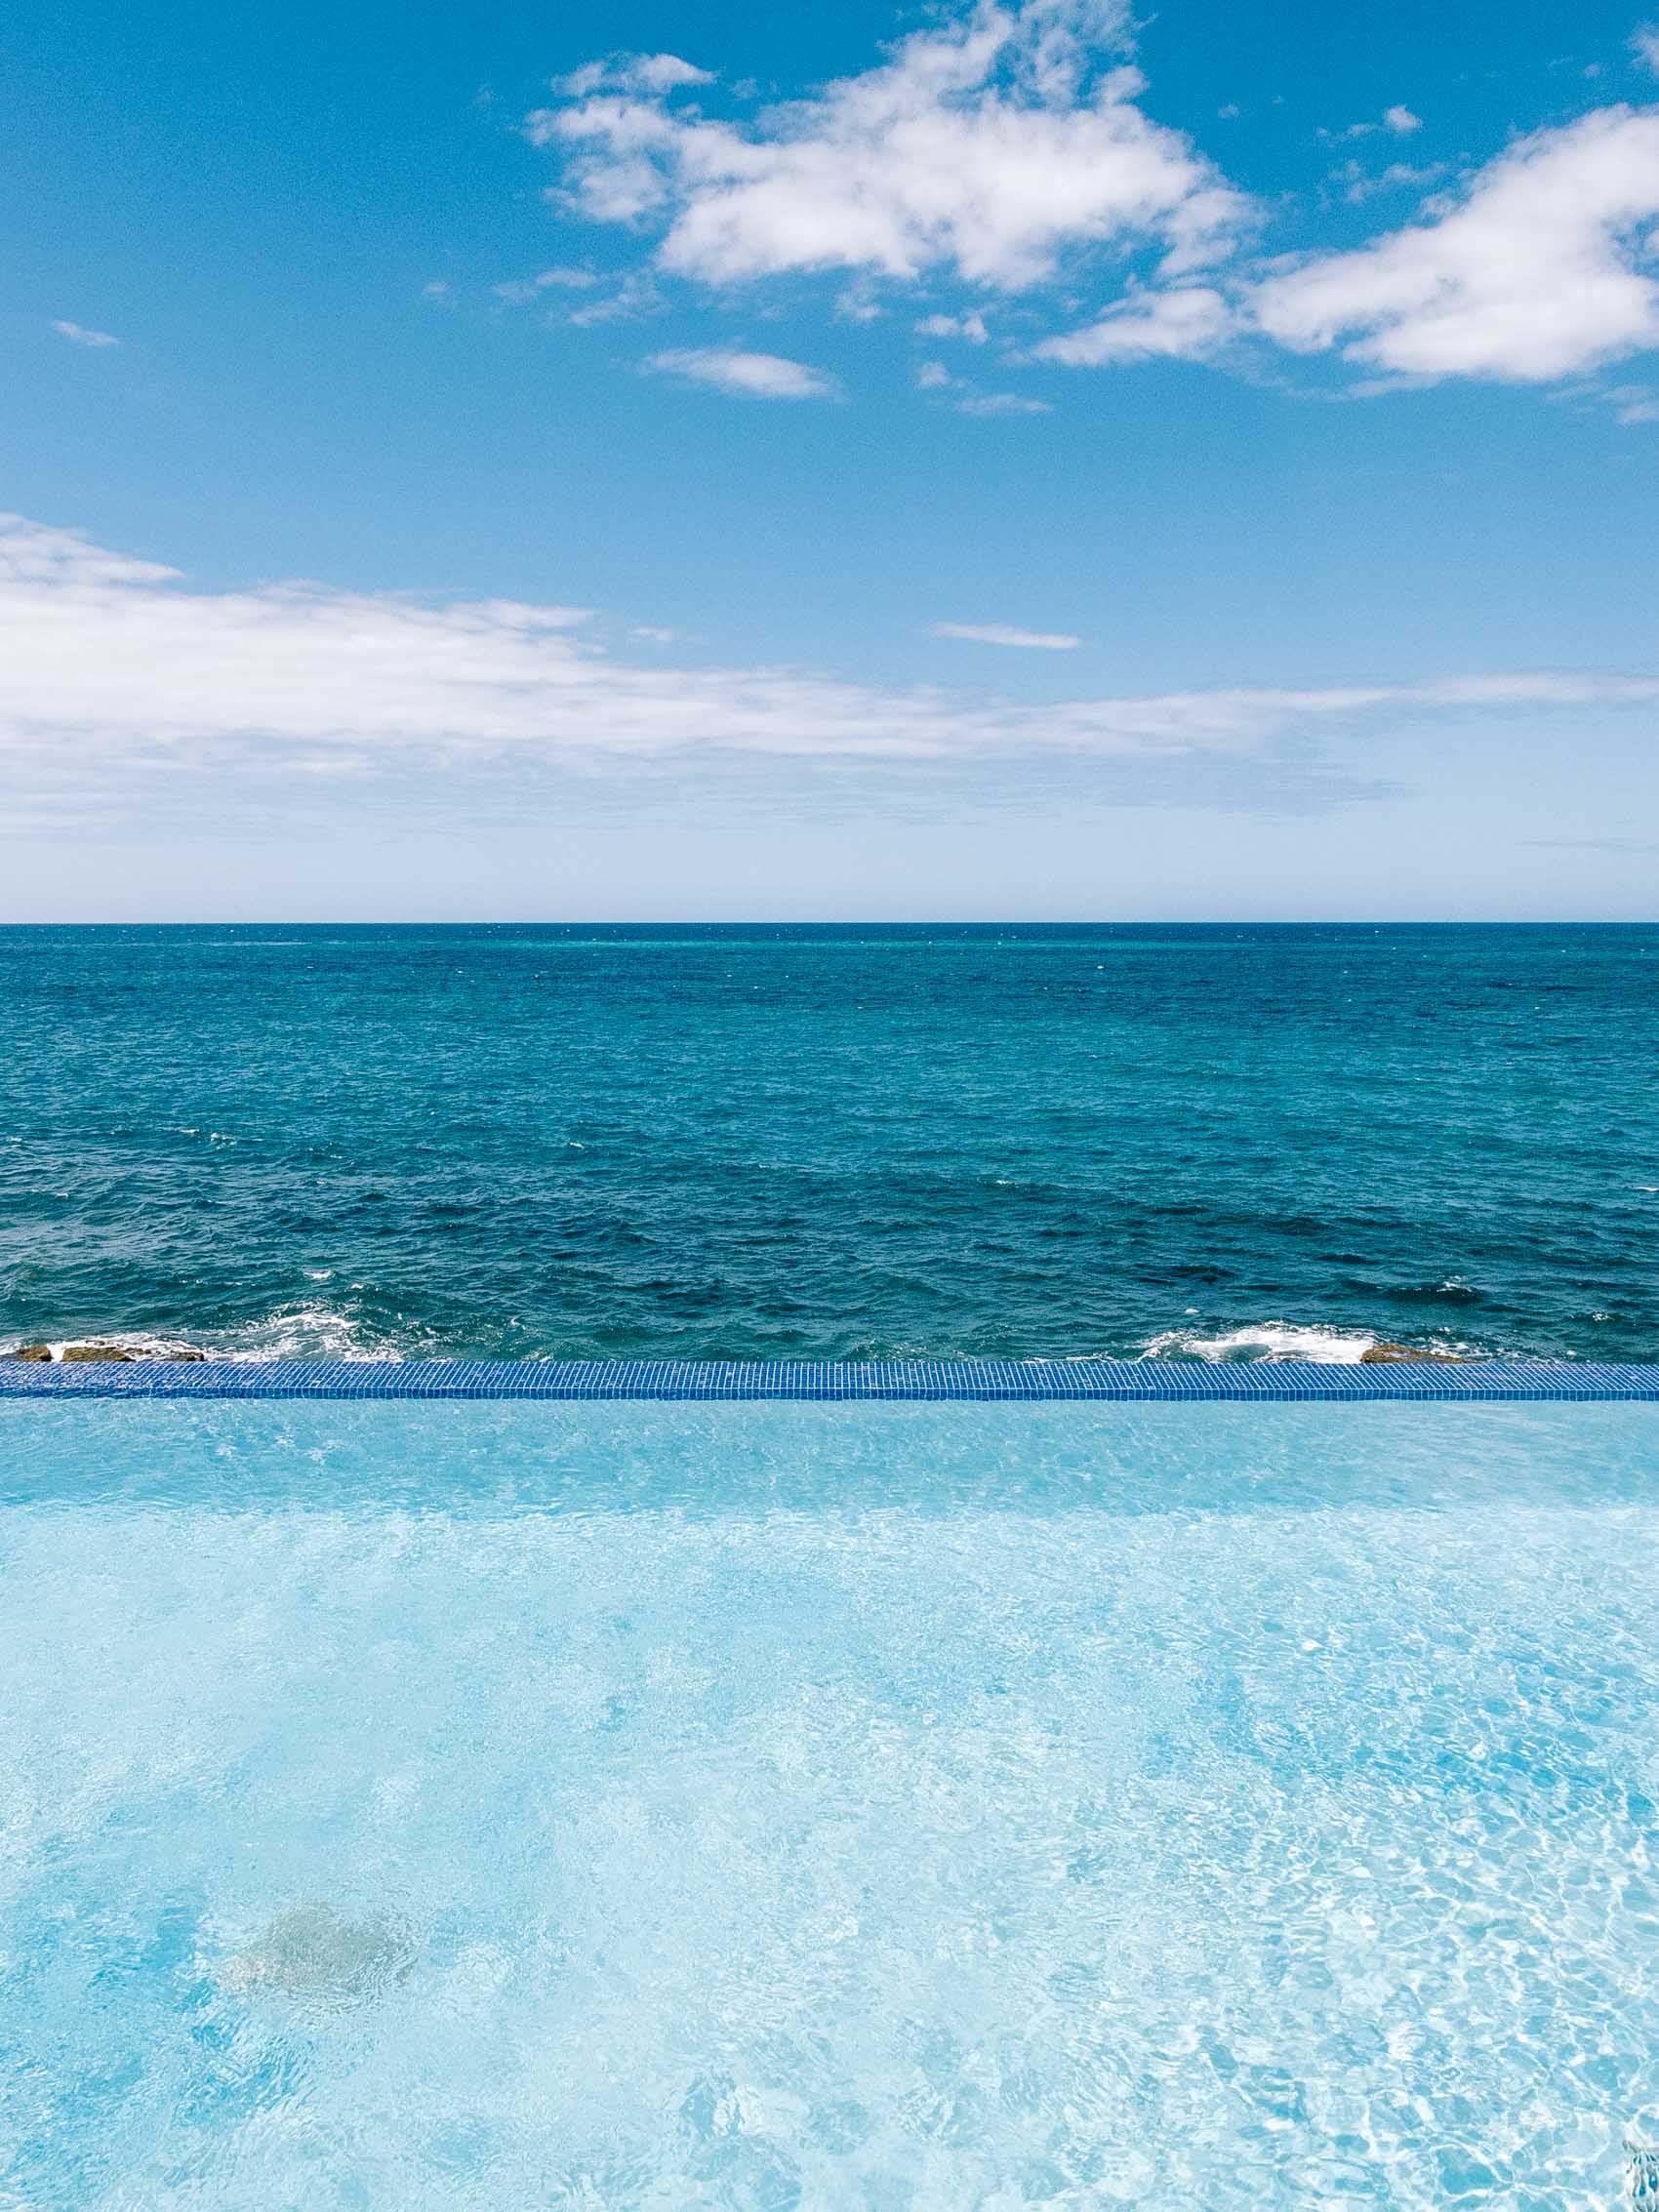 Infinity pool overlooking the Caribbean ocean at the Condado Vanderbilt hotel in San Juan, Puerto Rico